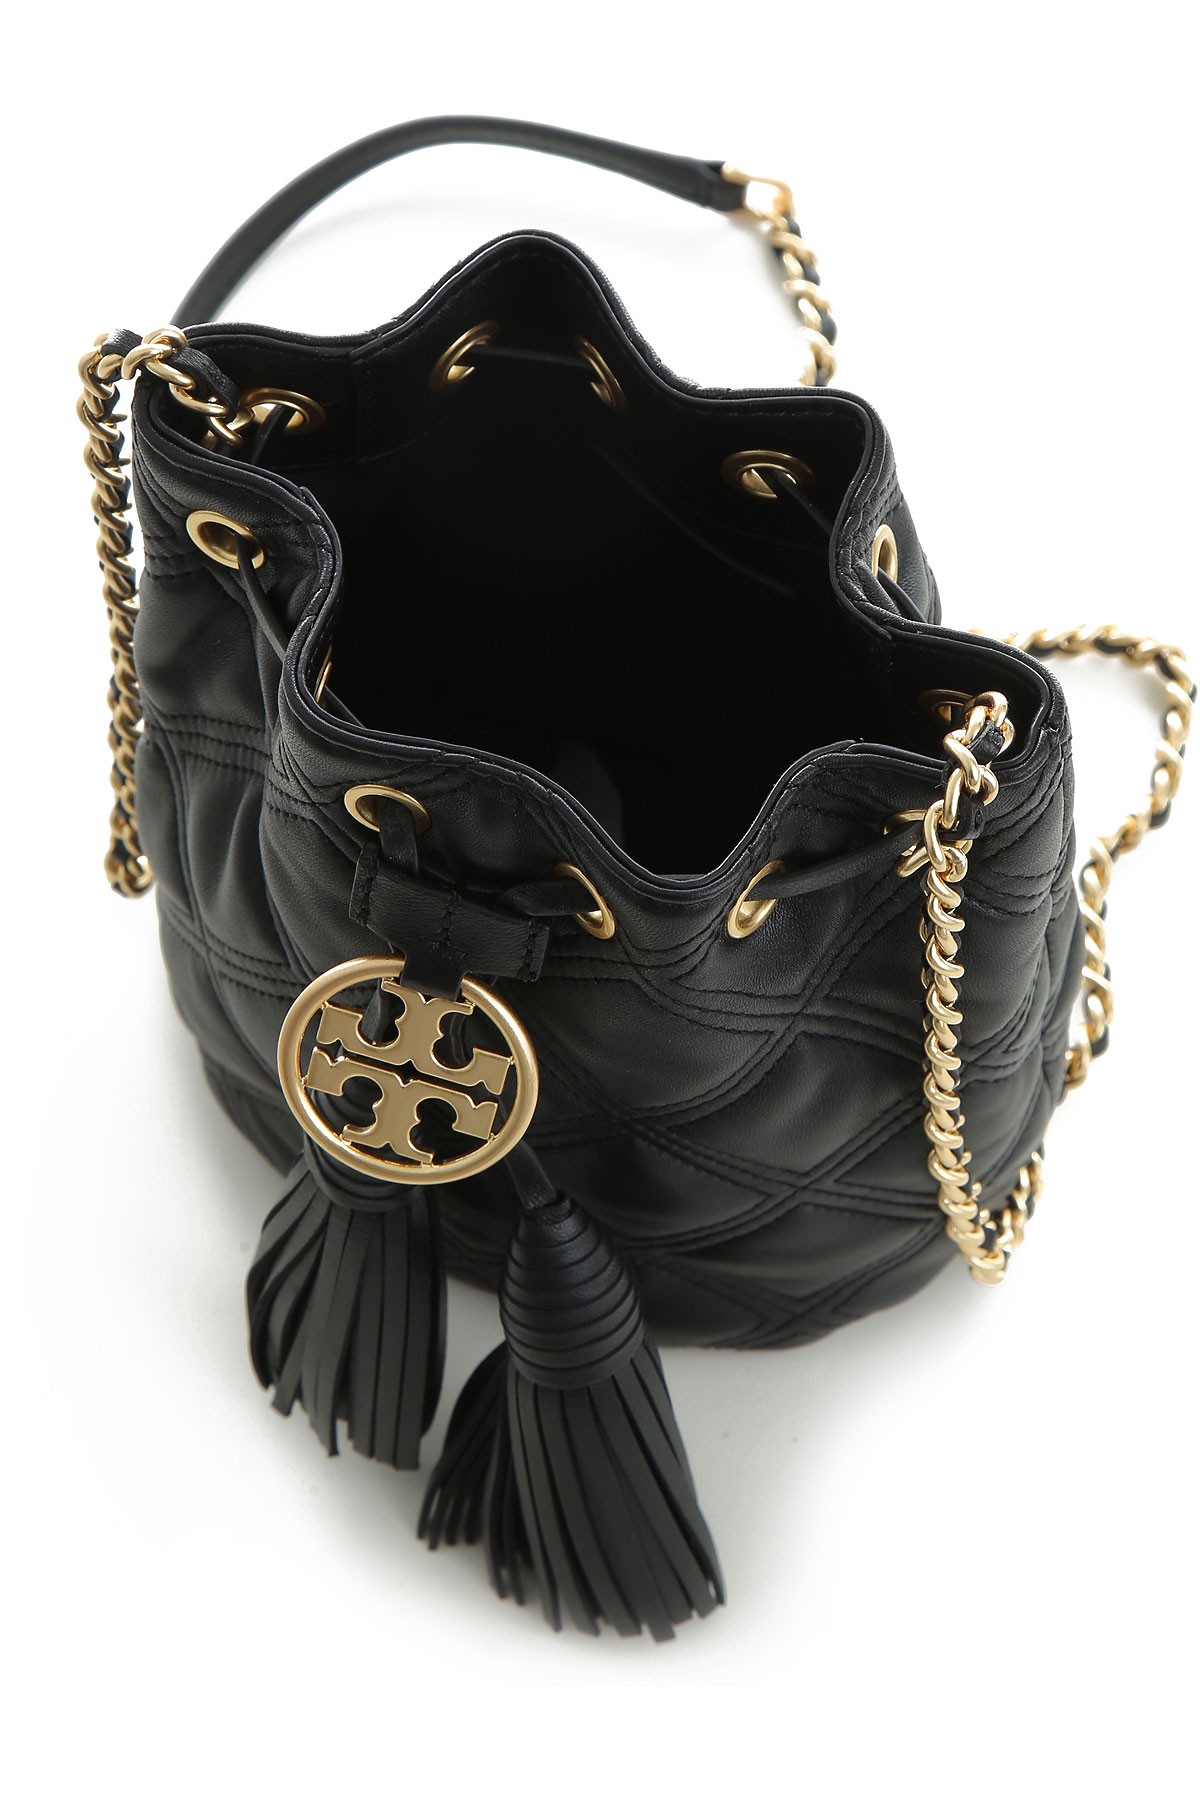 Handbags Tory Burch, Style code: 74853-fleming-001